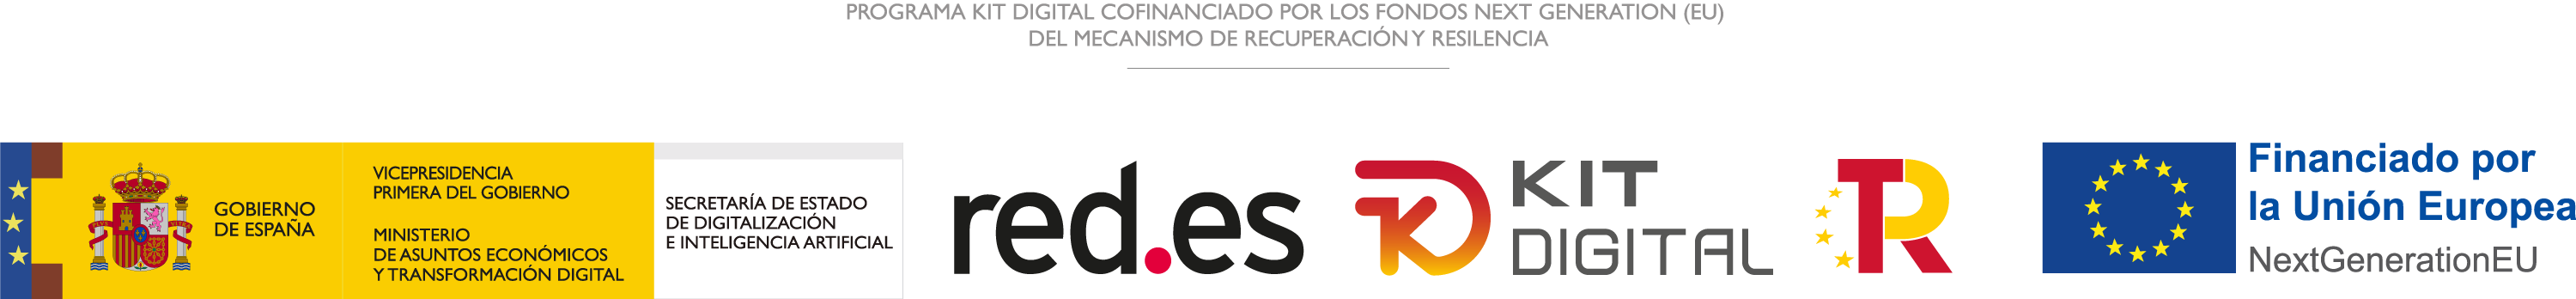 Programa Kit Digital iniciativa de Gobierno de Españ